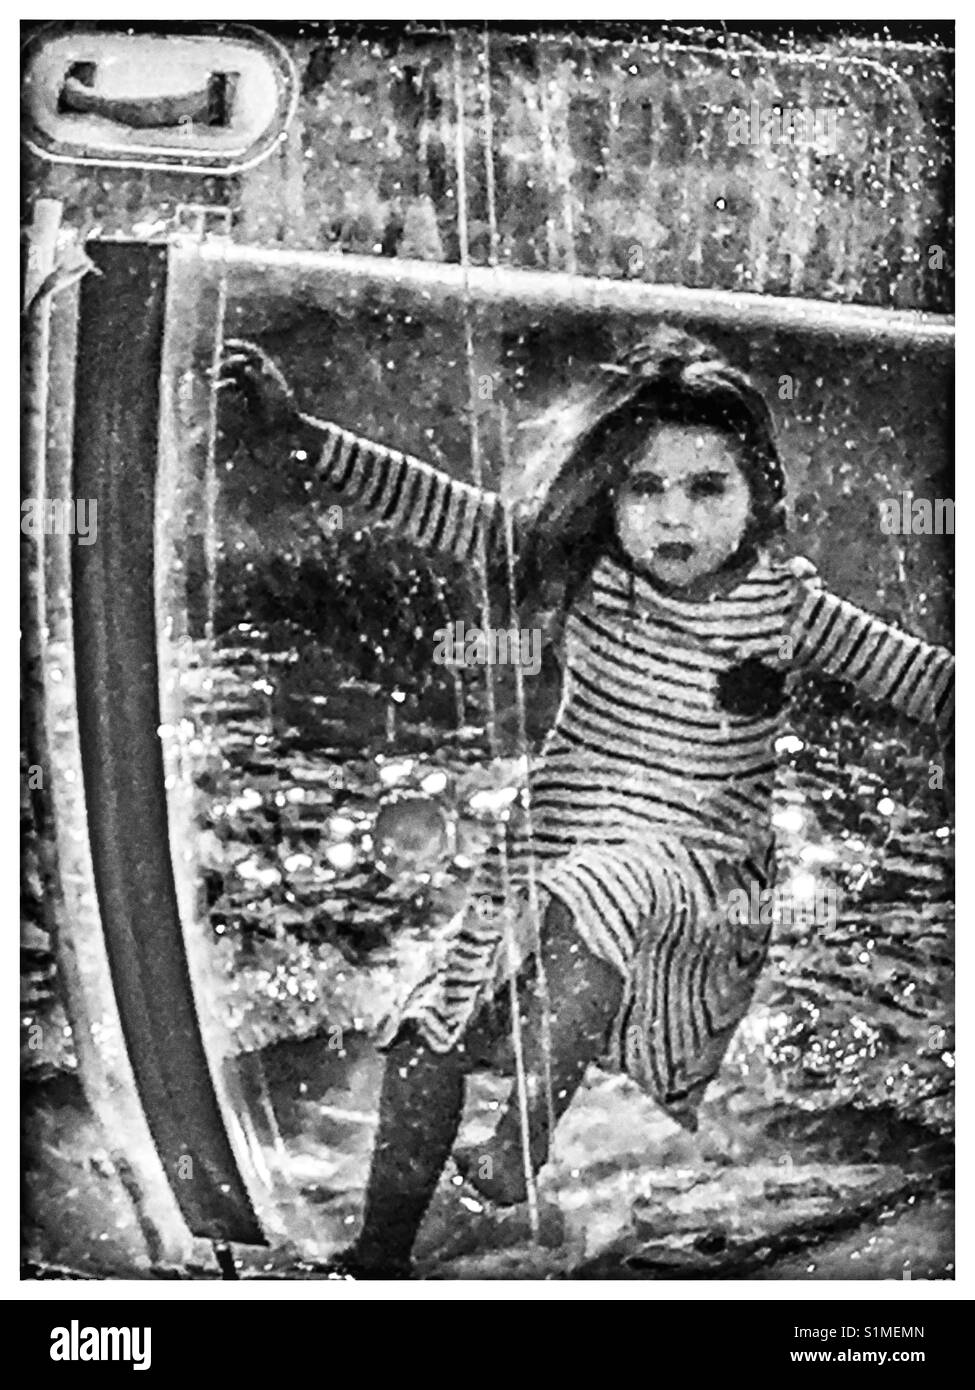 5 year old girl Water Zorbing. Stock Photo